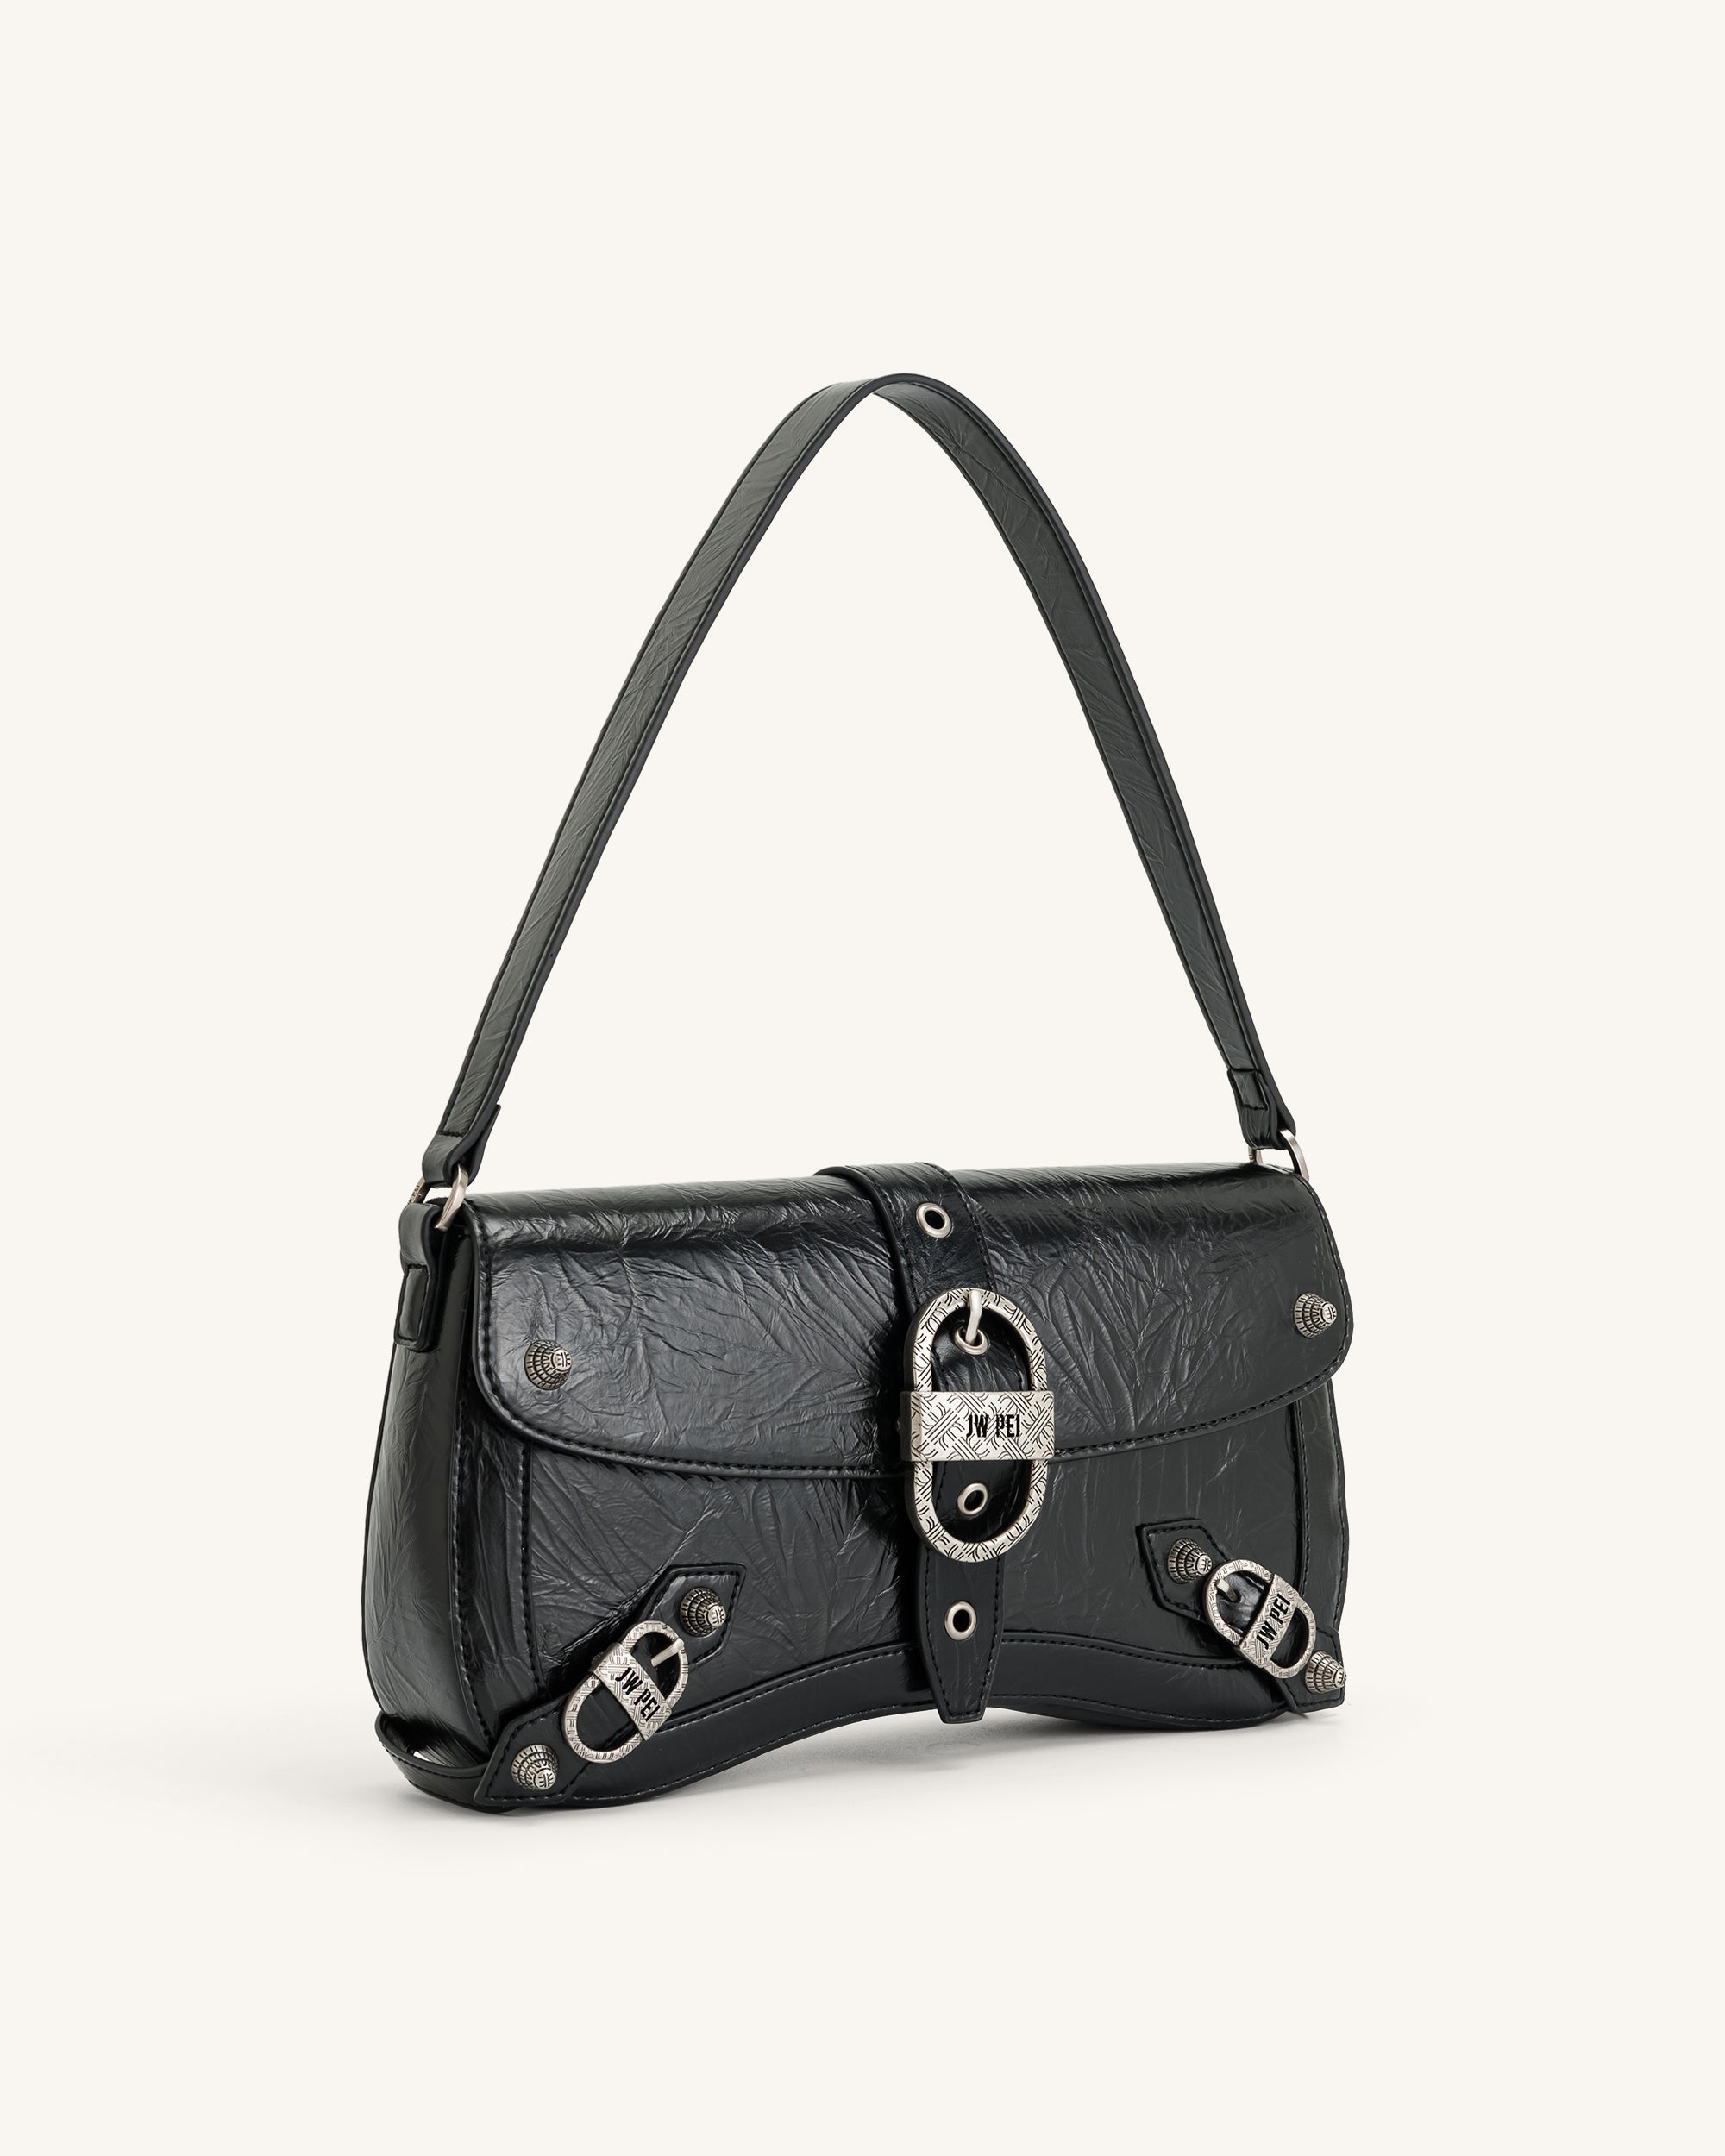 JW PEI Women's Lily Shoulder Bag (Black): Handbags